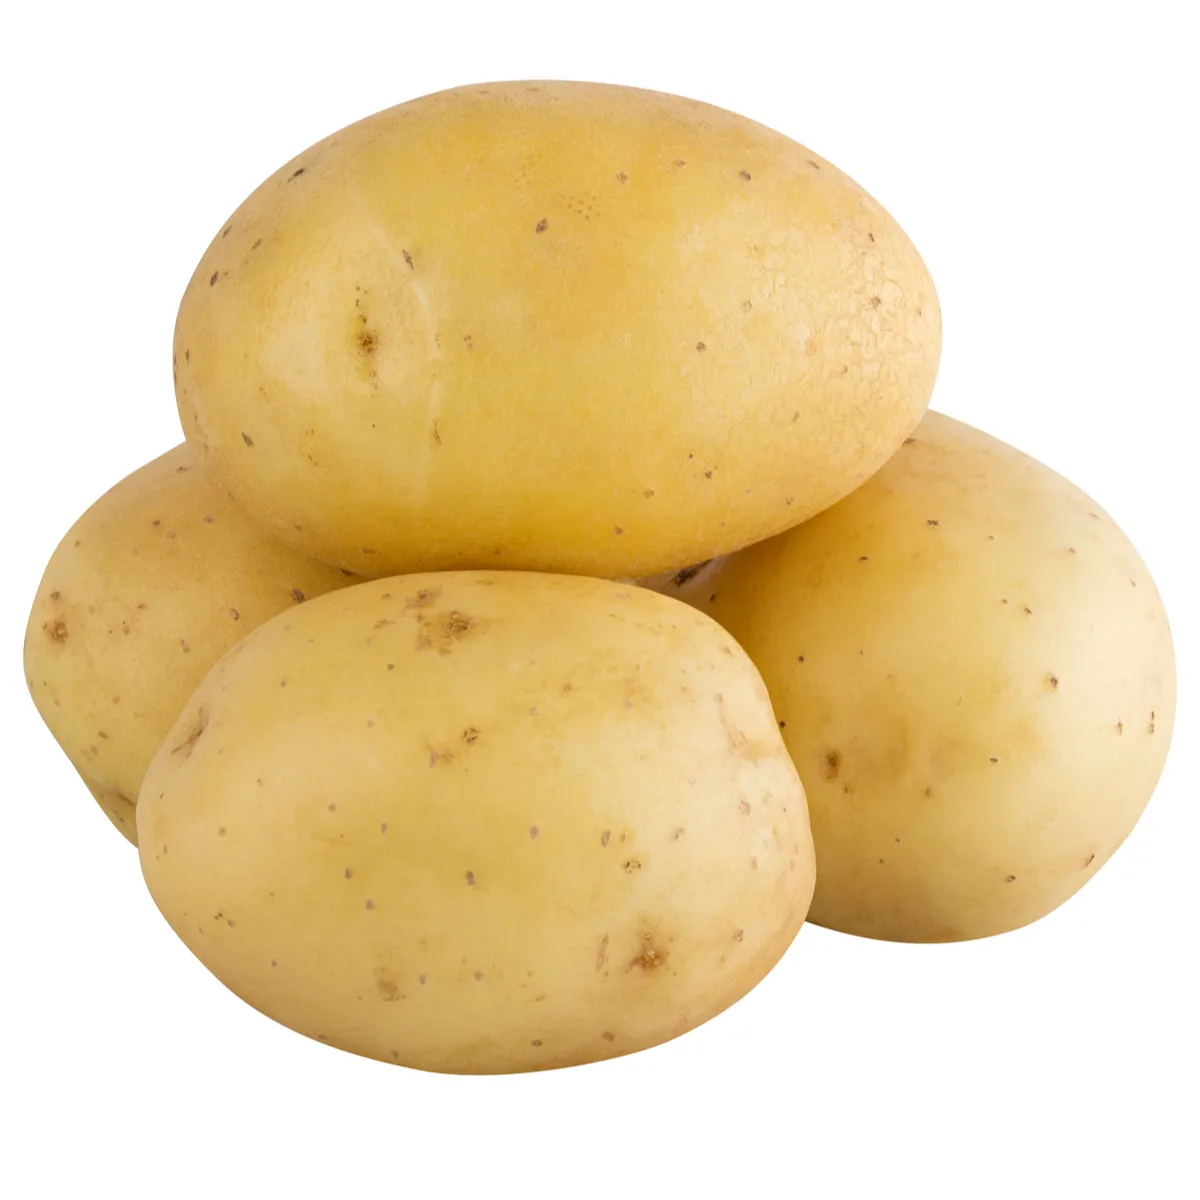 Satılık sebze taze patates toptan taze patates